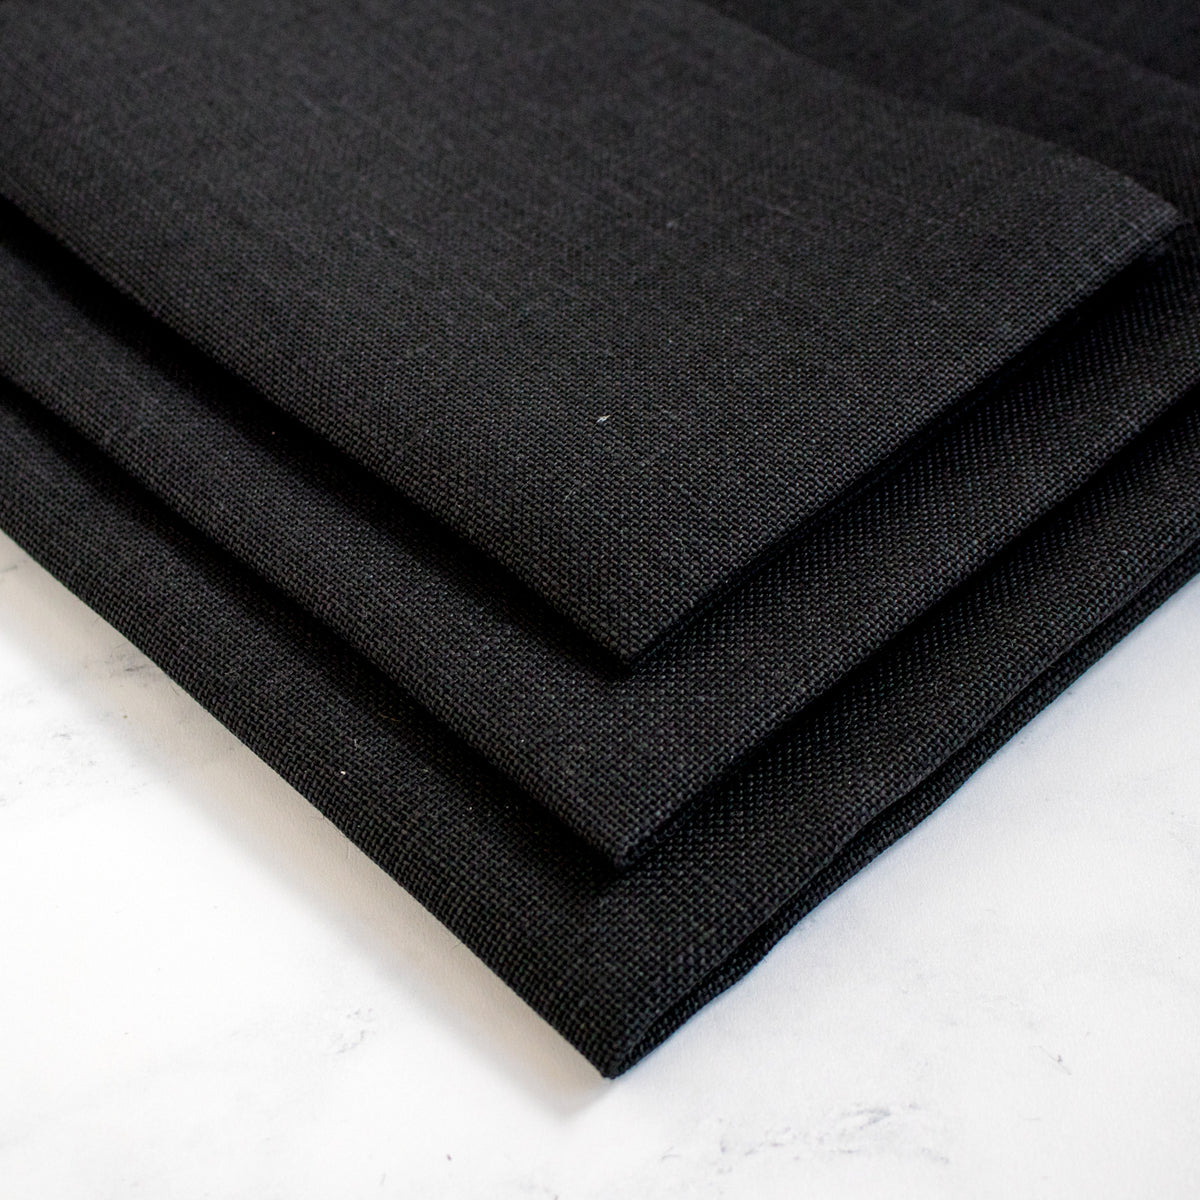 Cashel Black Linen Cross Stitch Fabric - 28 count